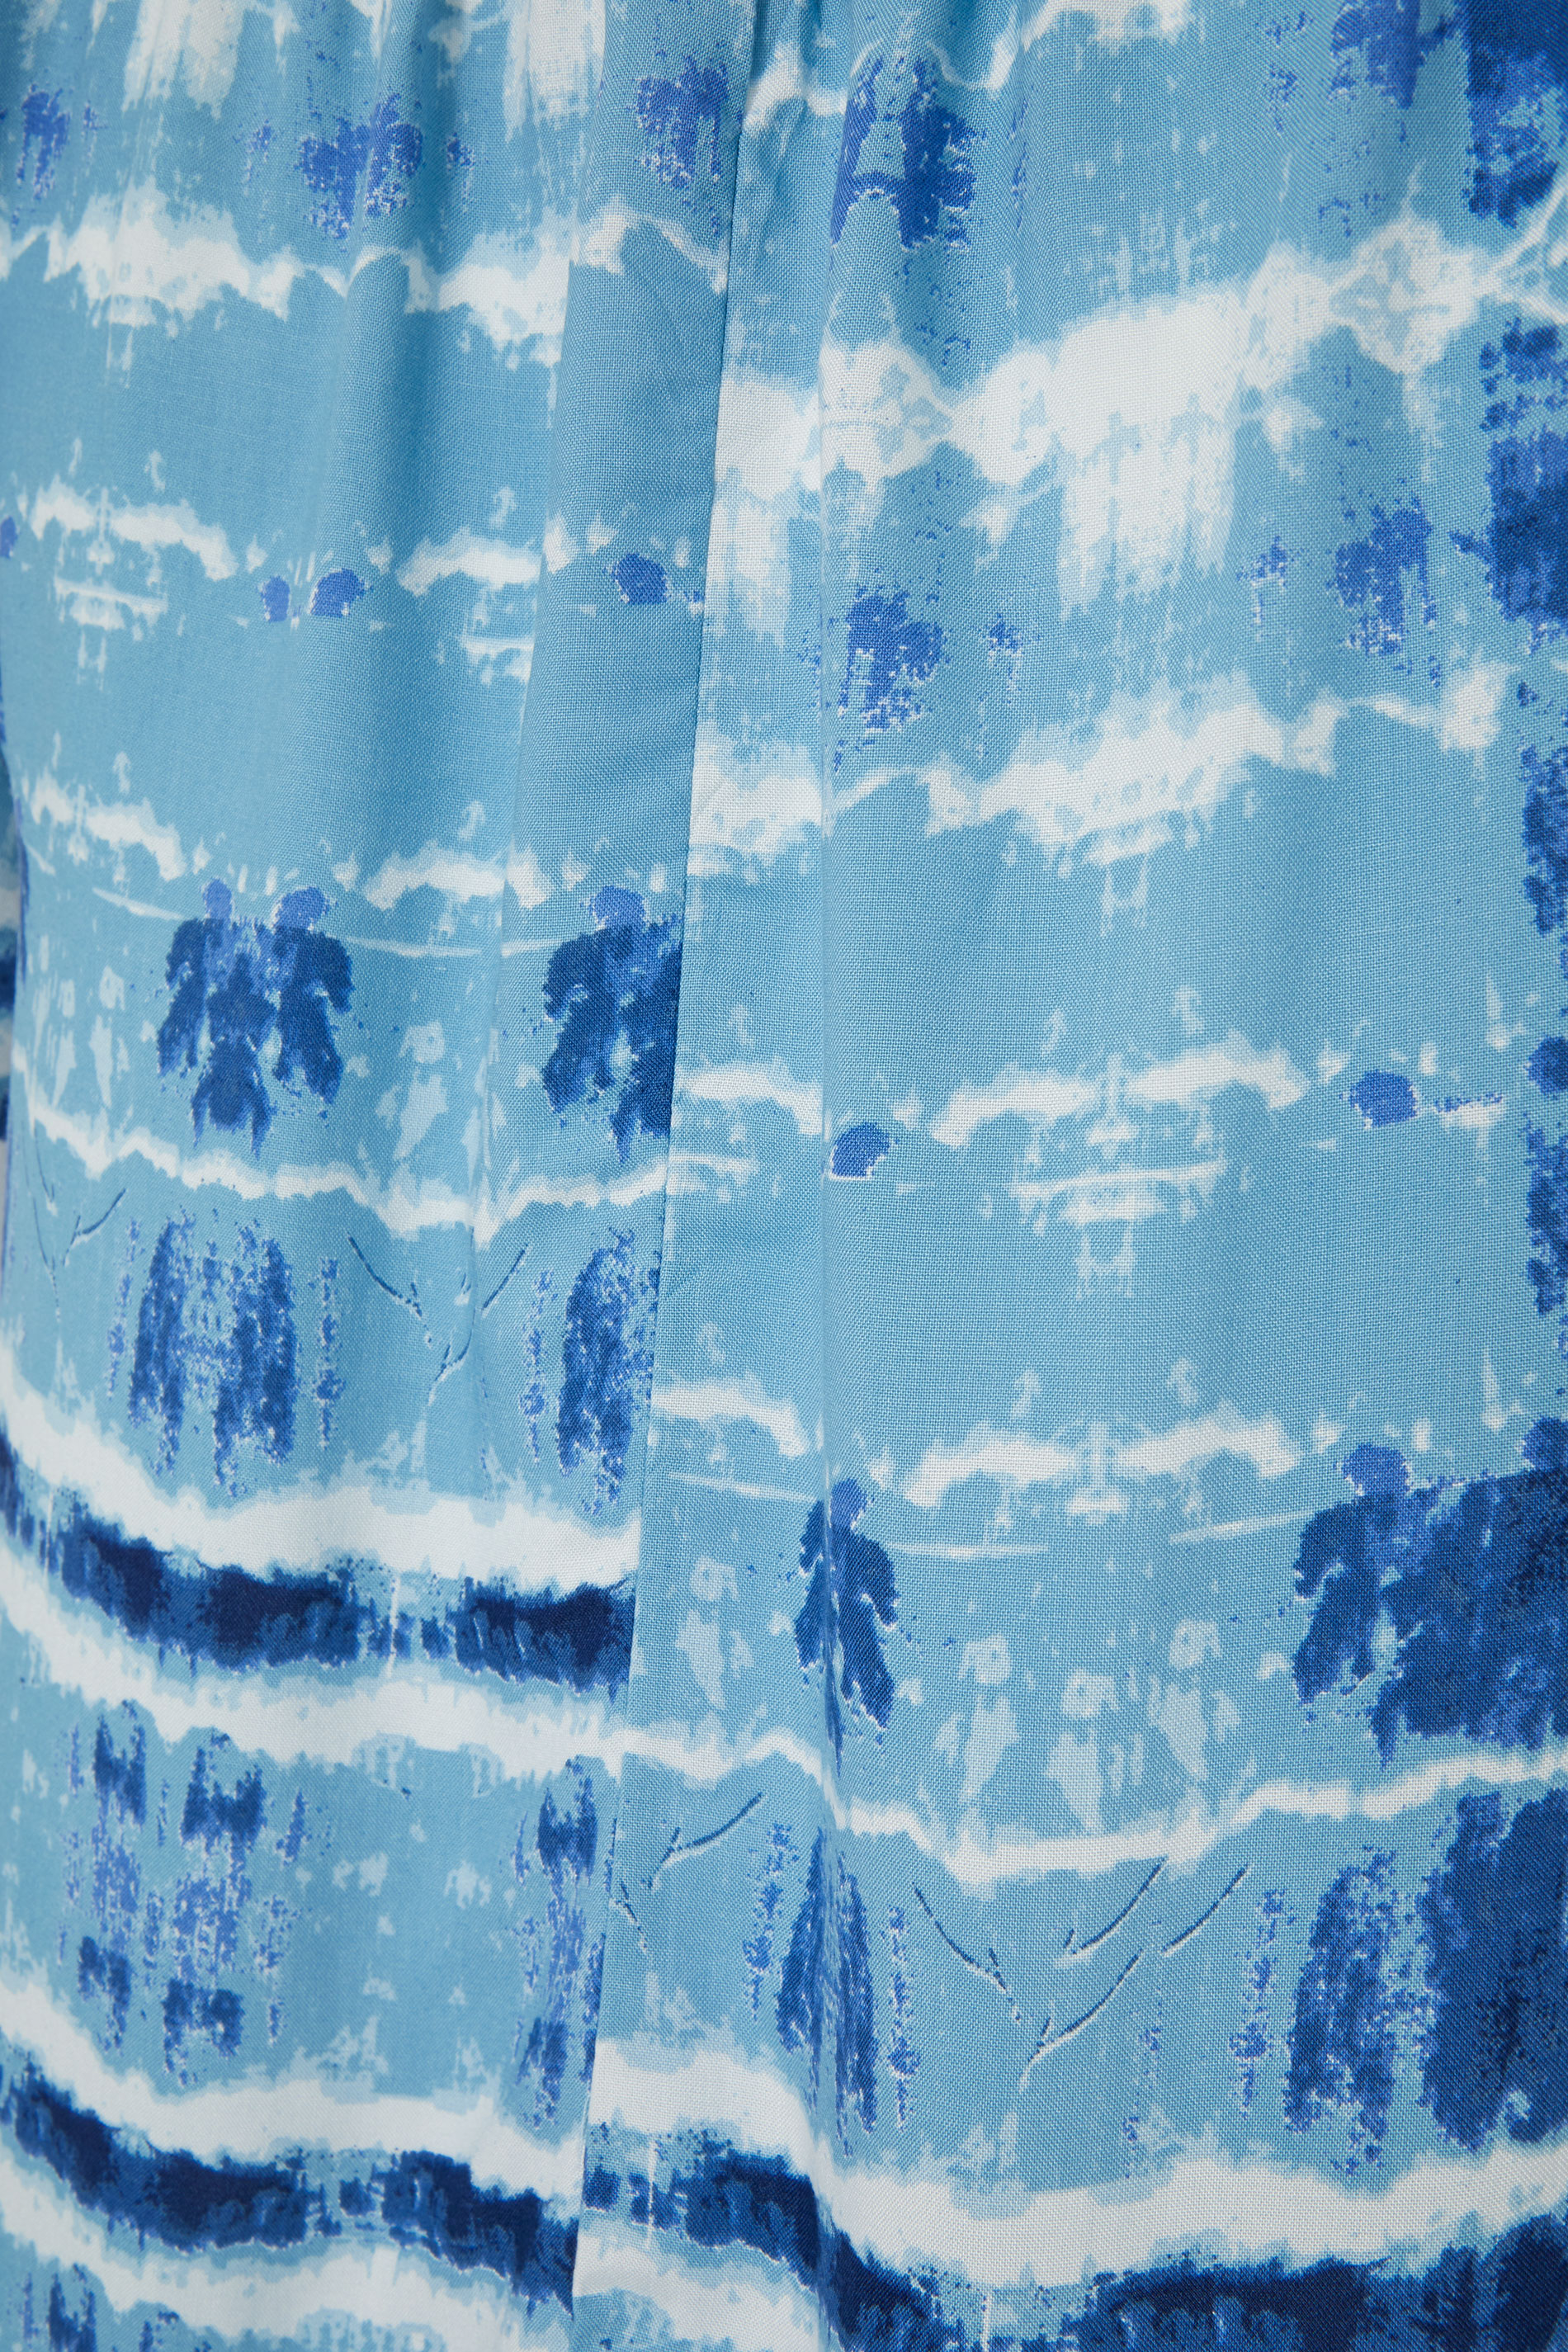 Grande taille  Tops Grande taille  Tuniques | Tunique Bohème Bleue Style Tie & Dye - CD32319